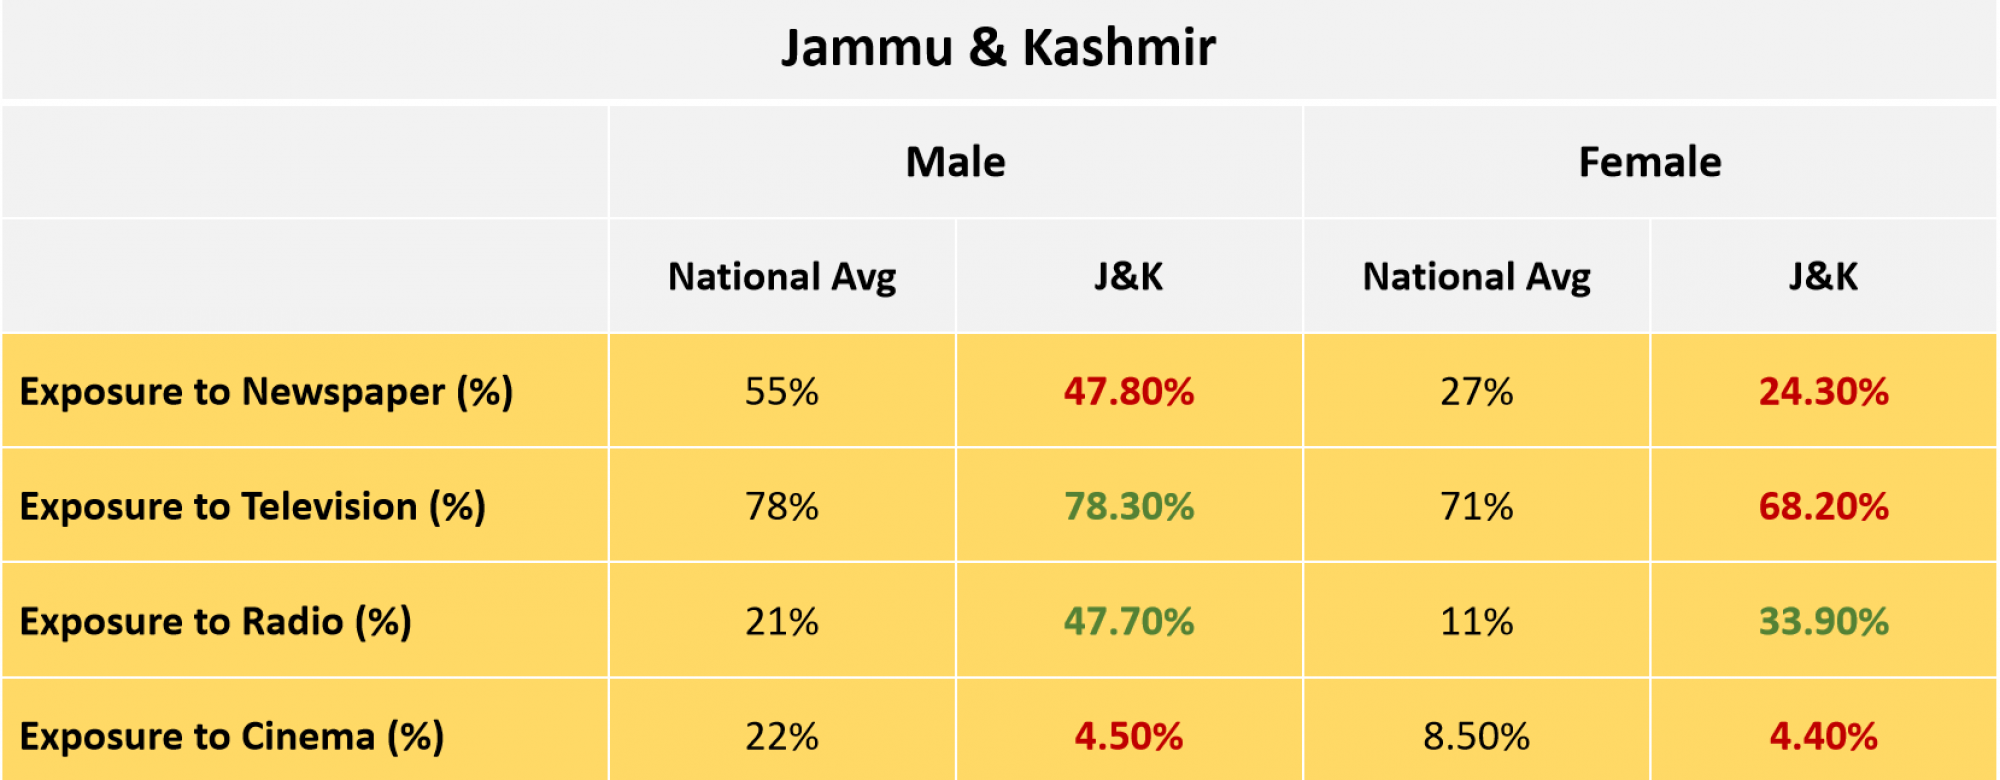 Jammu & Kashmir media exposure